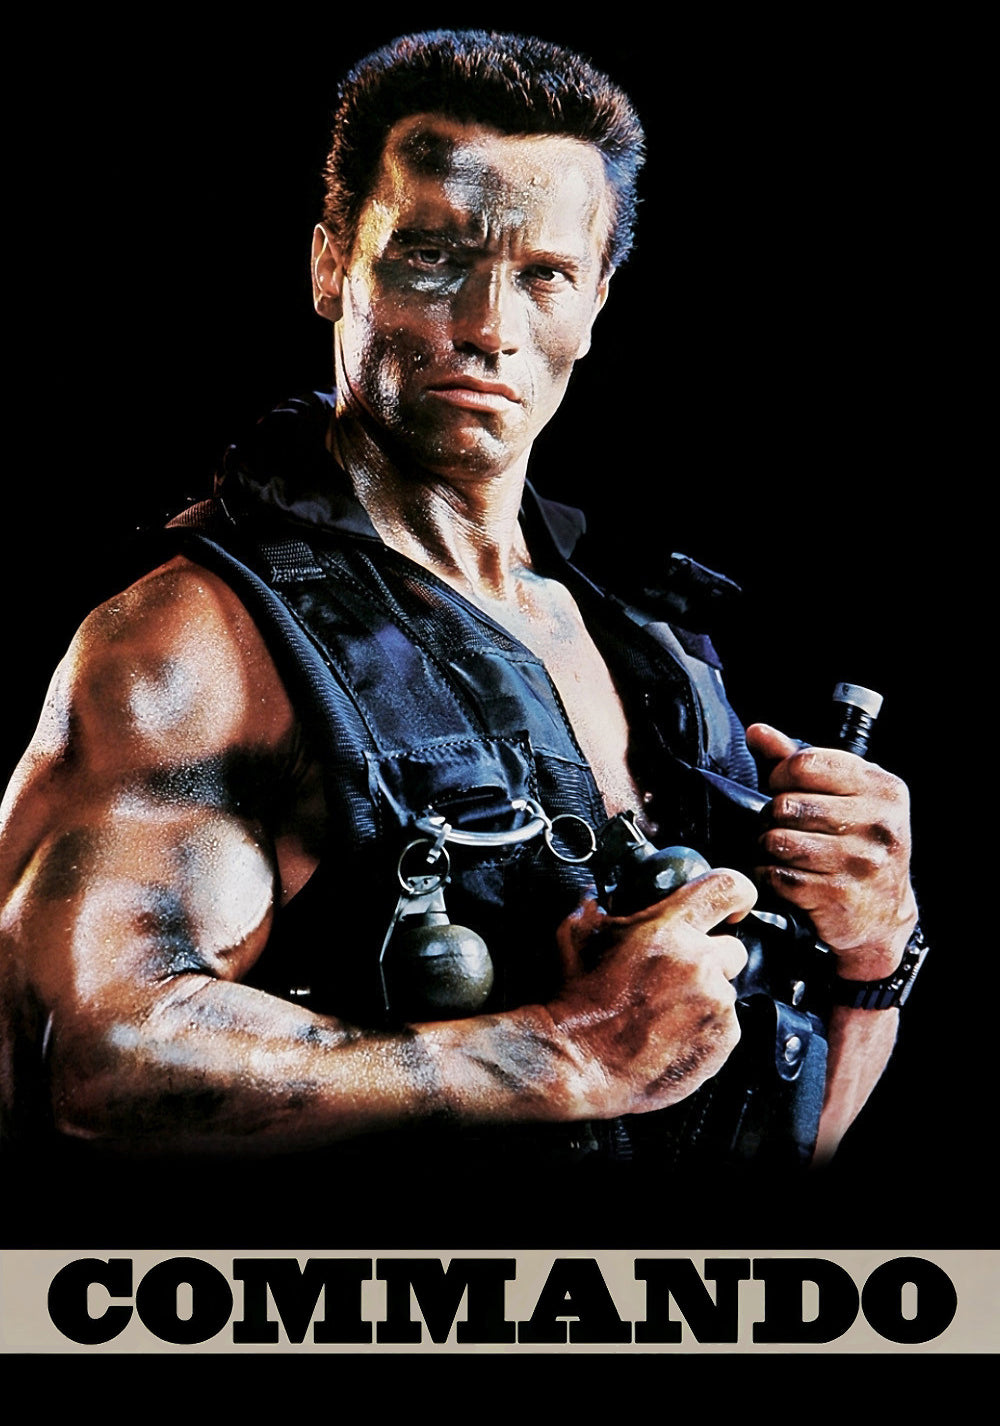 Commando VHS (1985)